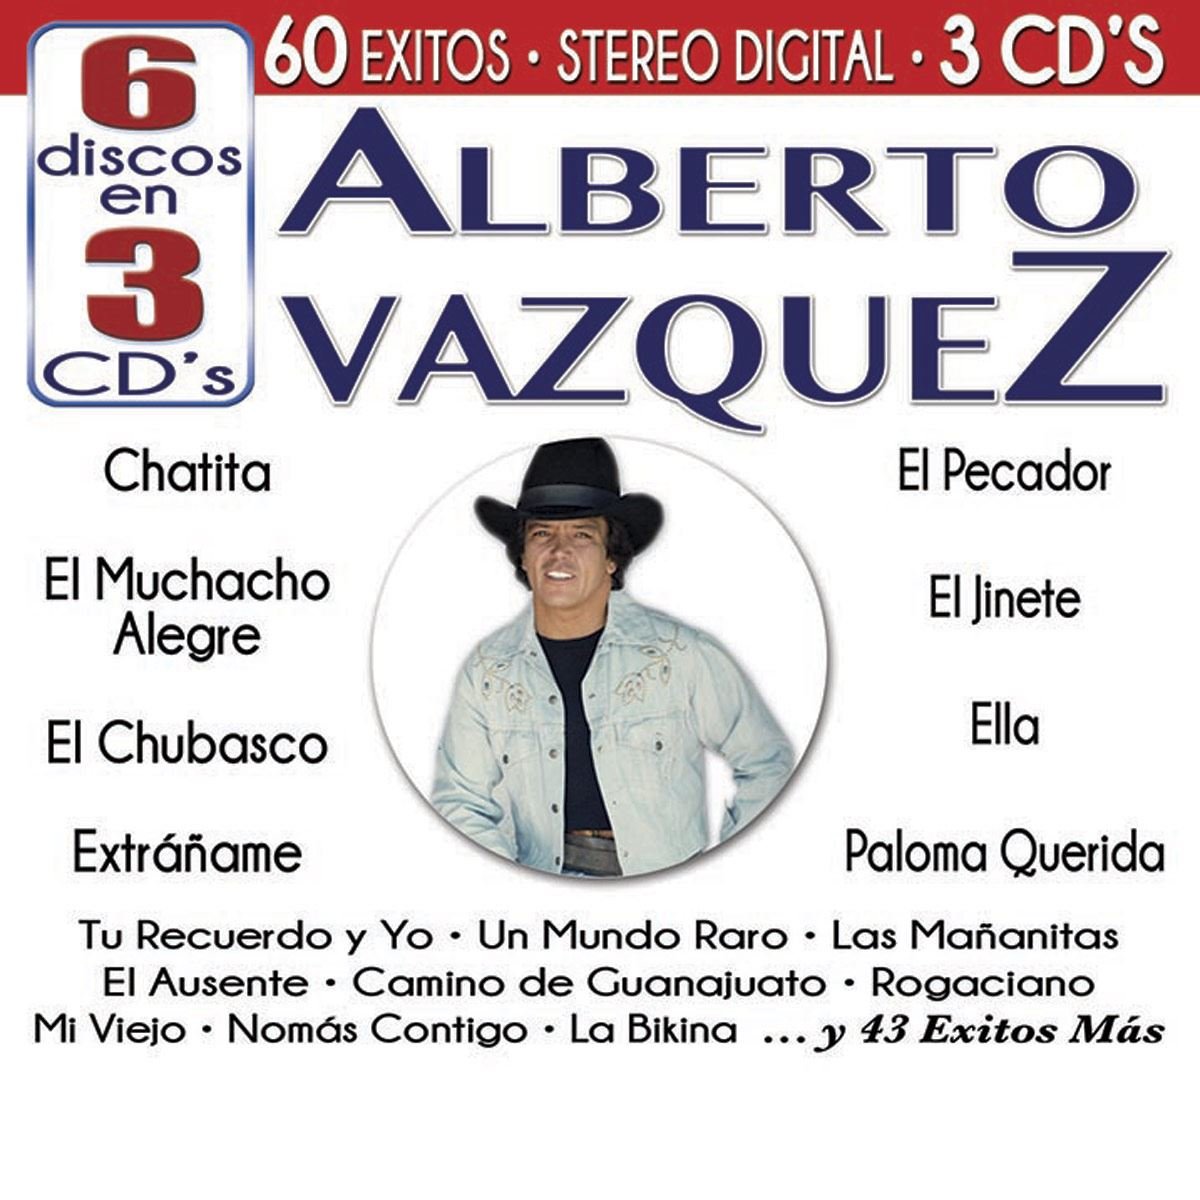 CD Alberto Vázquez